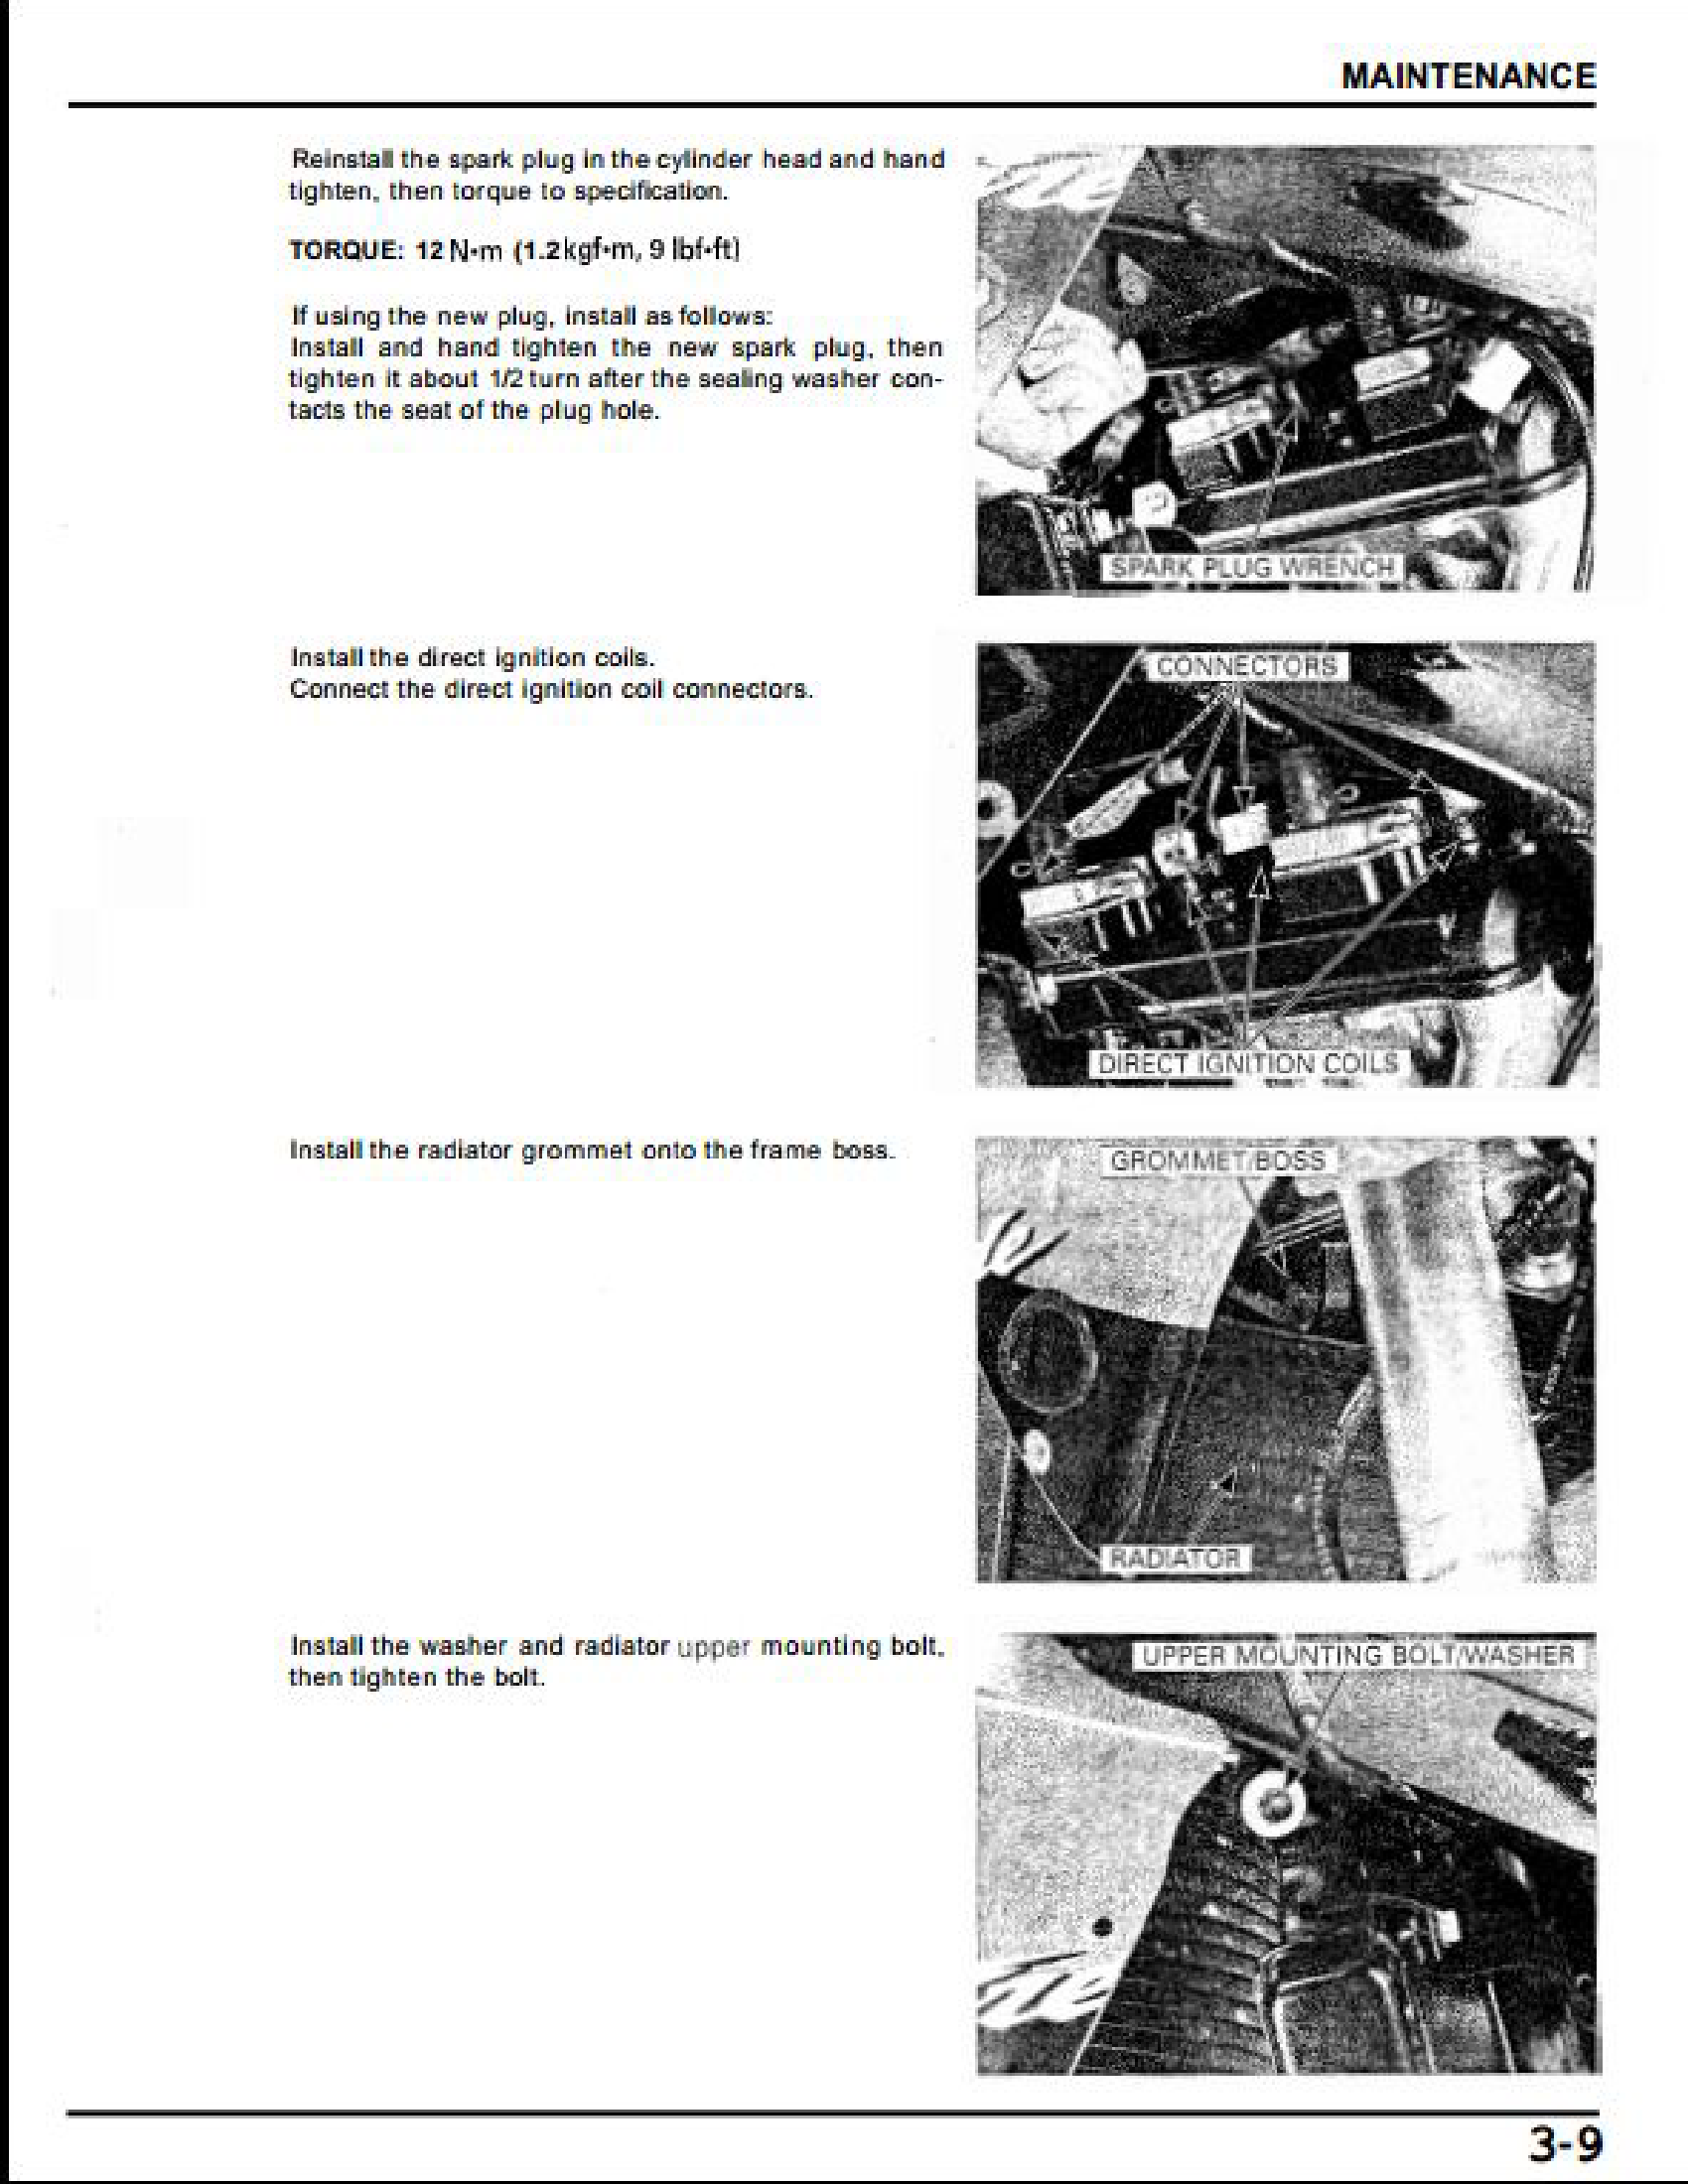 Honda CBR954RR Motocycle manual